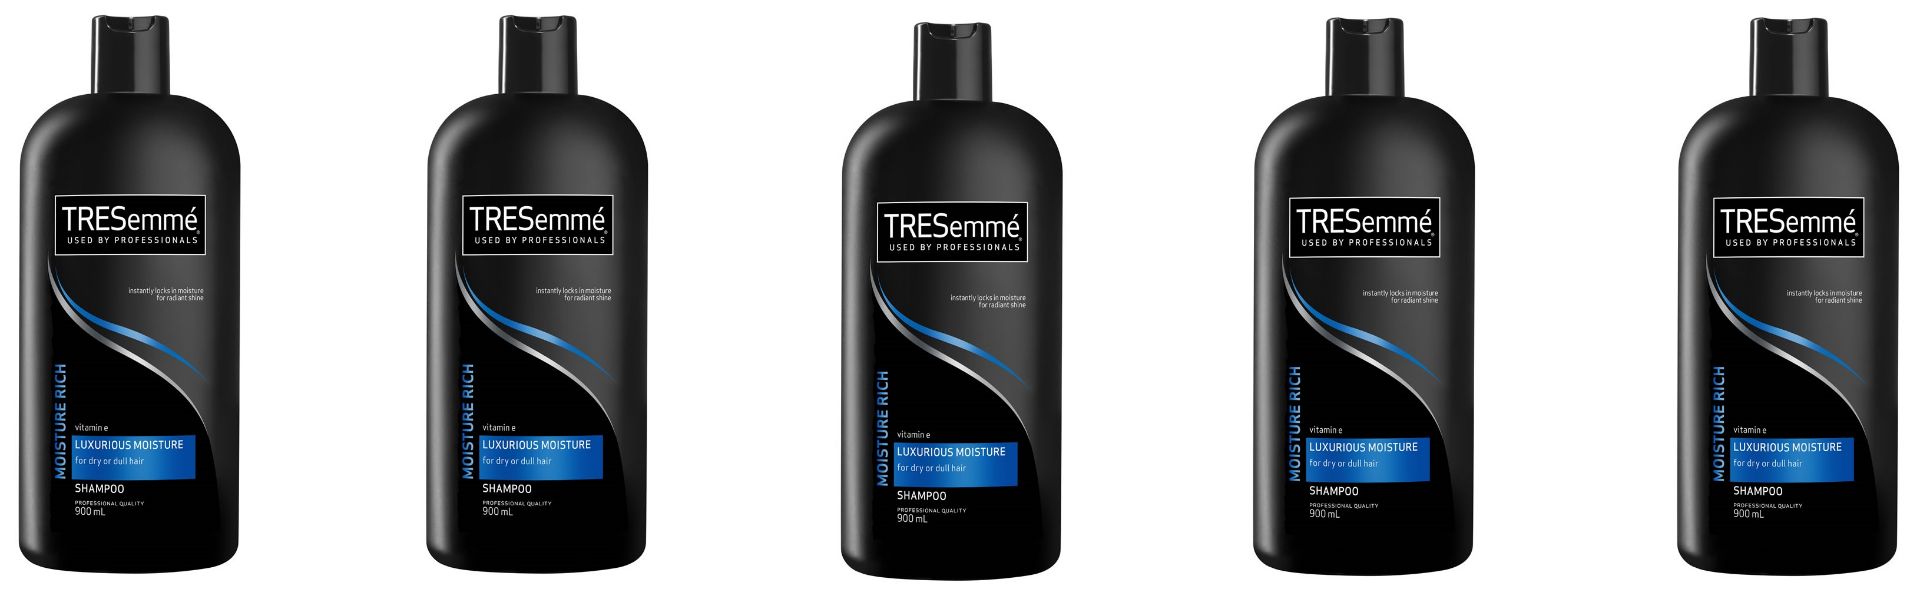 V *TRADE QTY* Grade A A Lot Of Five 500ml TRESemme Moisture Rich Shampoo ISP £13.65 (Superdrug) X